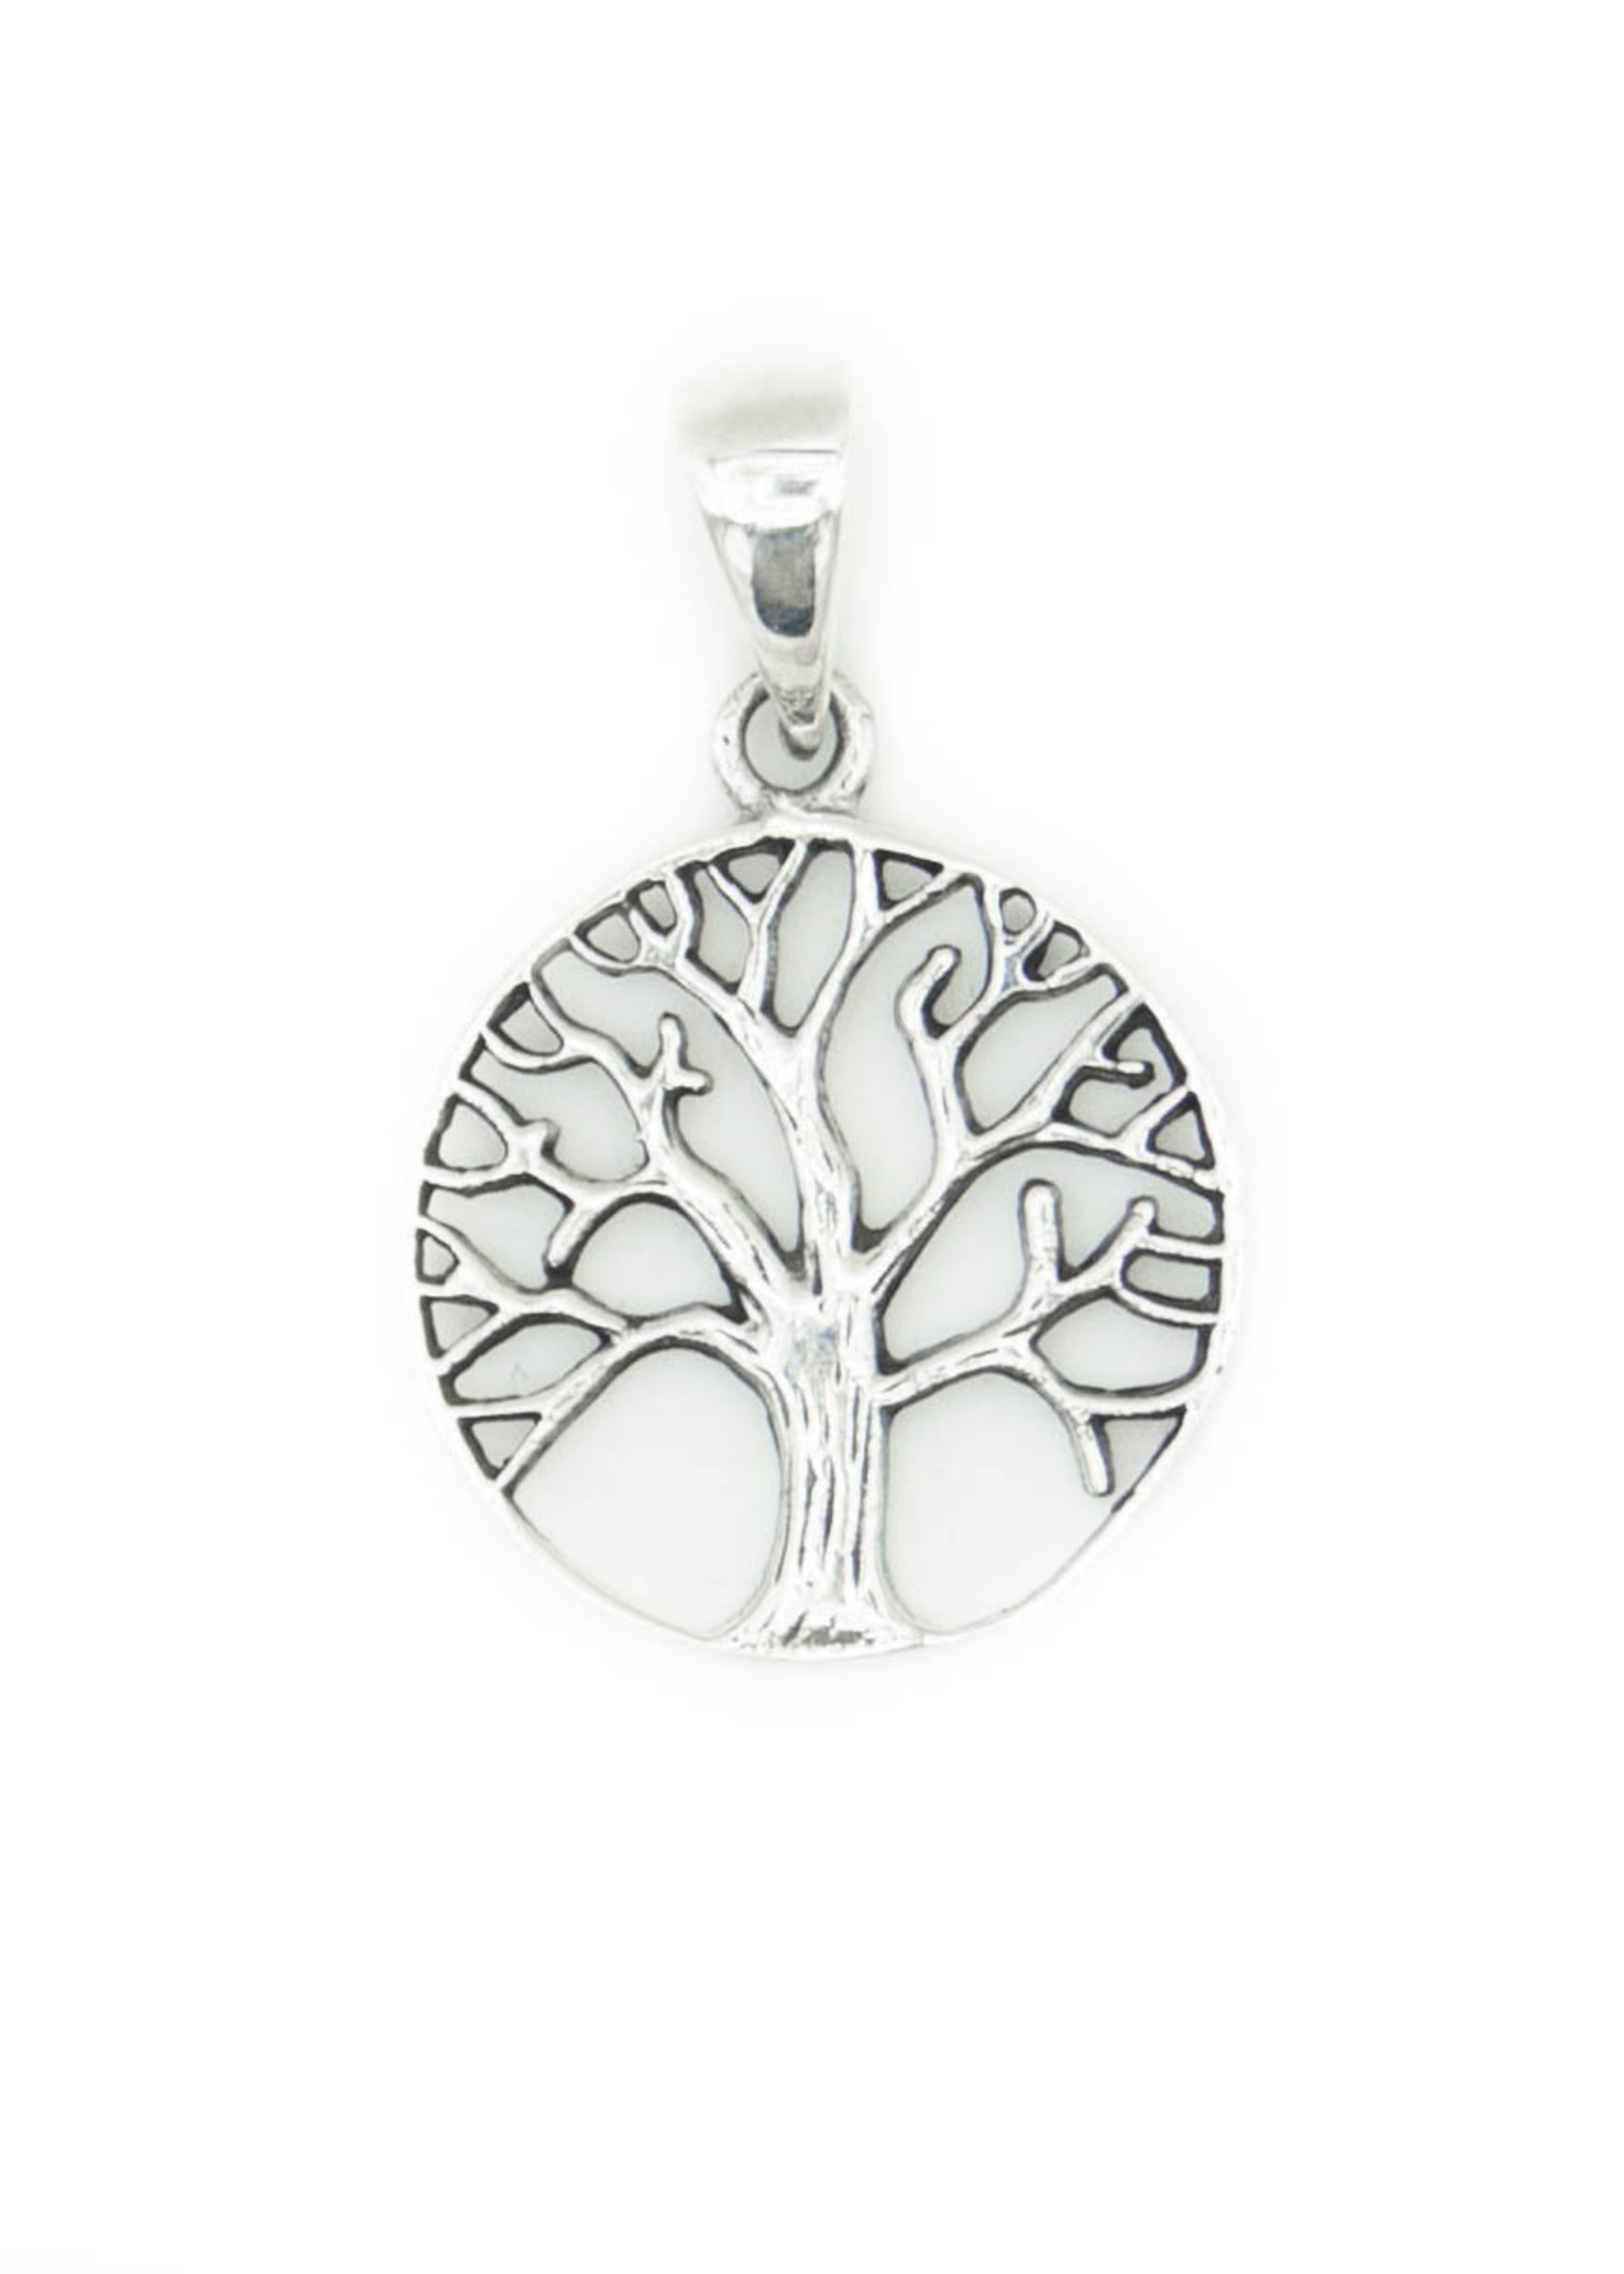 Silver pendant - Tree of life